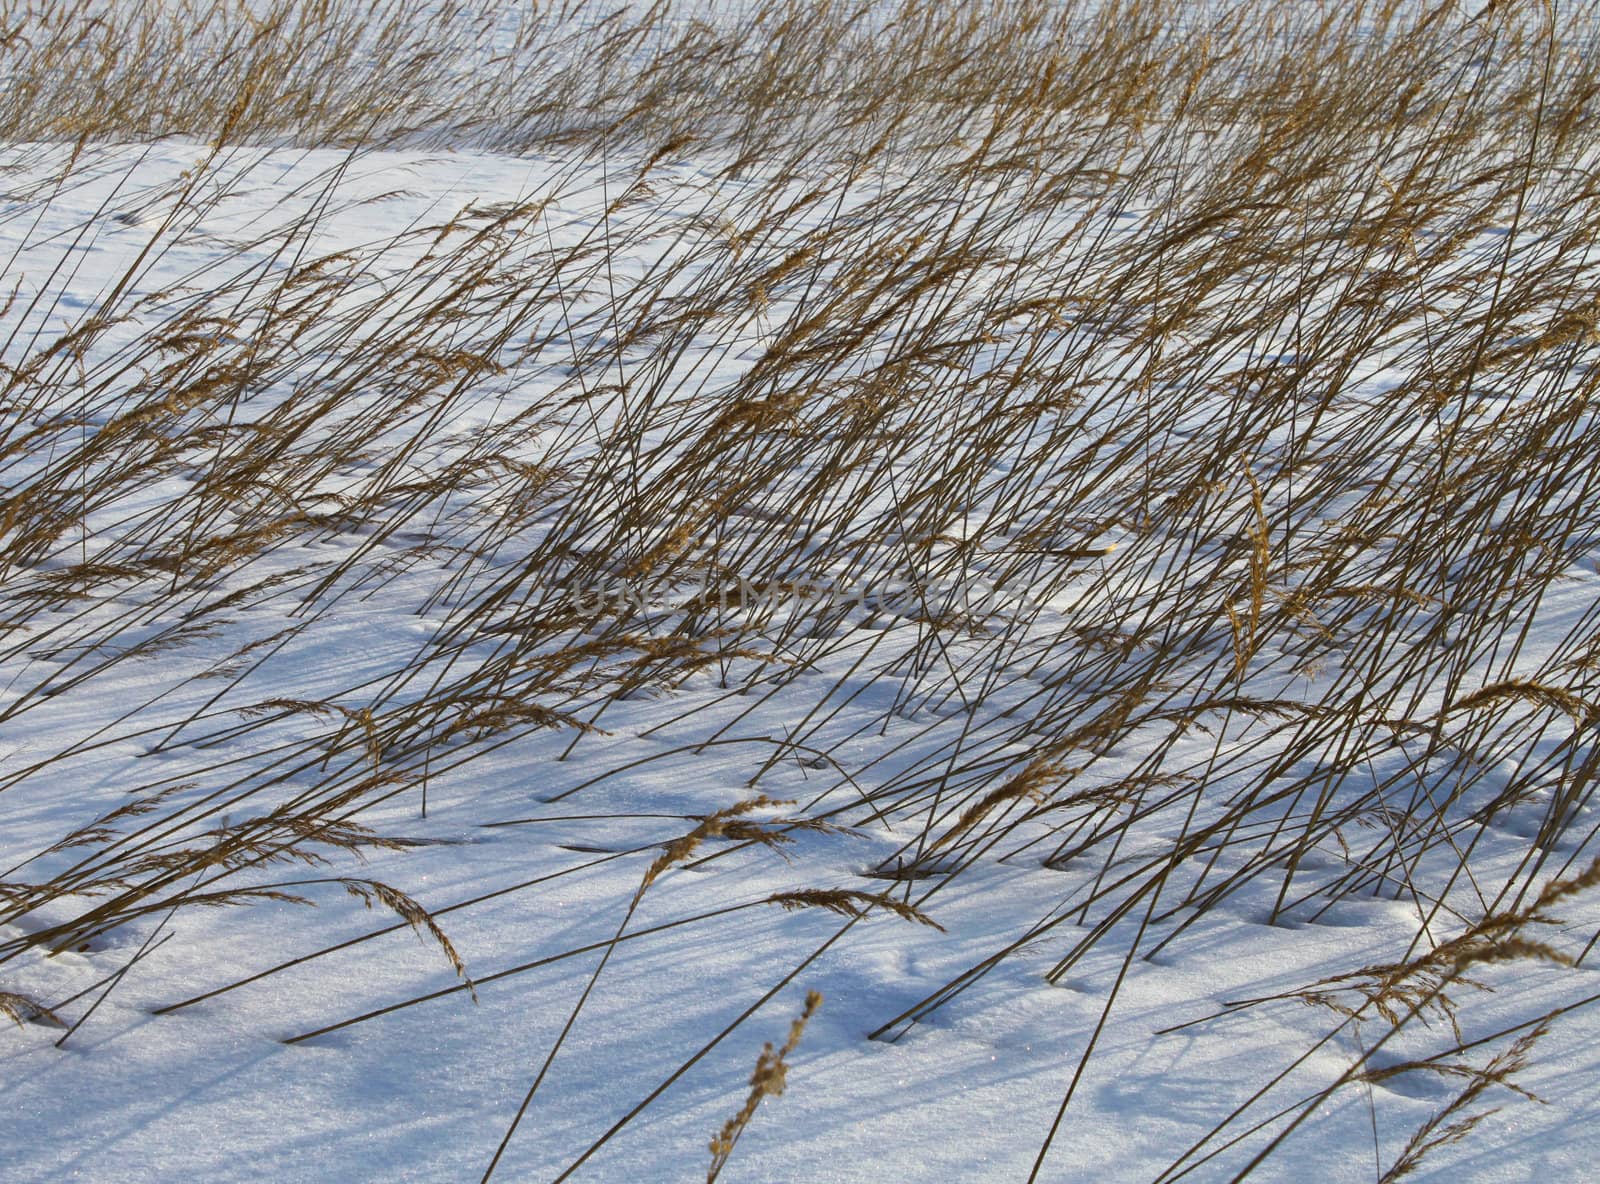 Reeds bent by wind, in deep winter snow